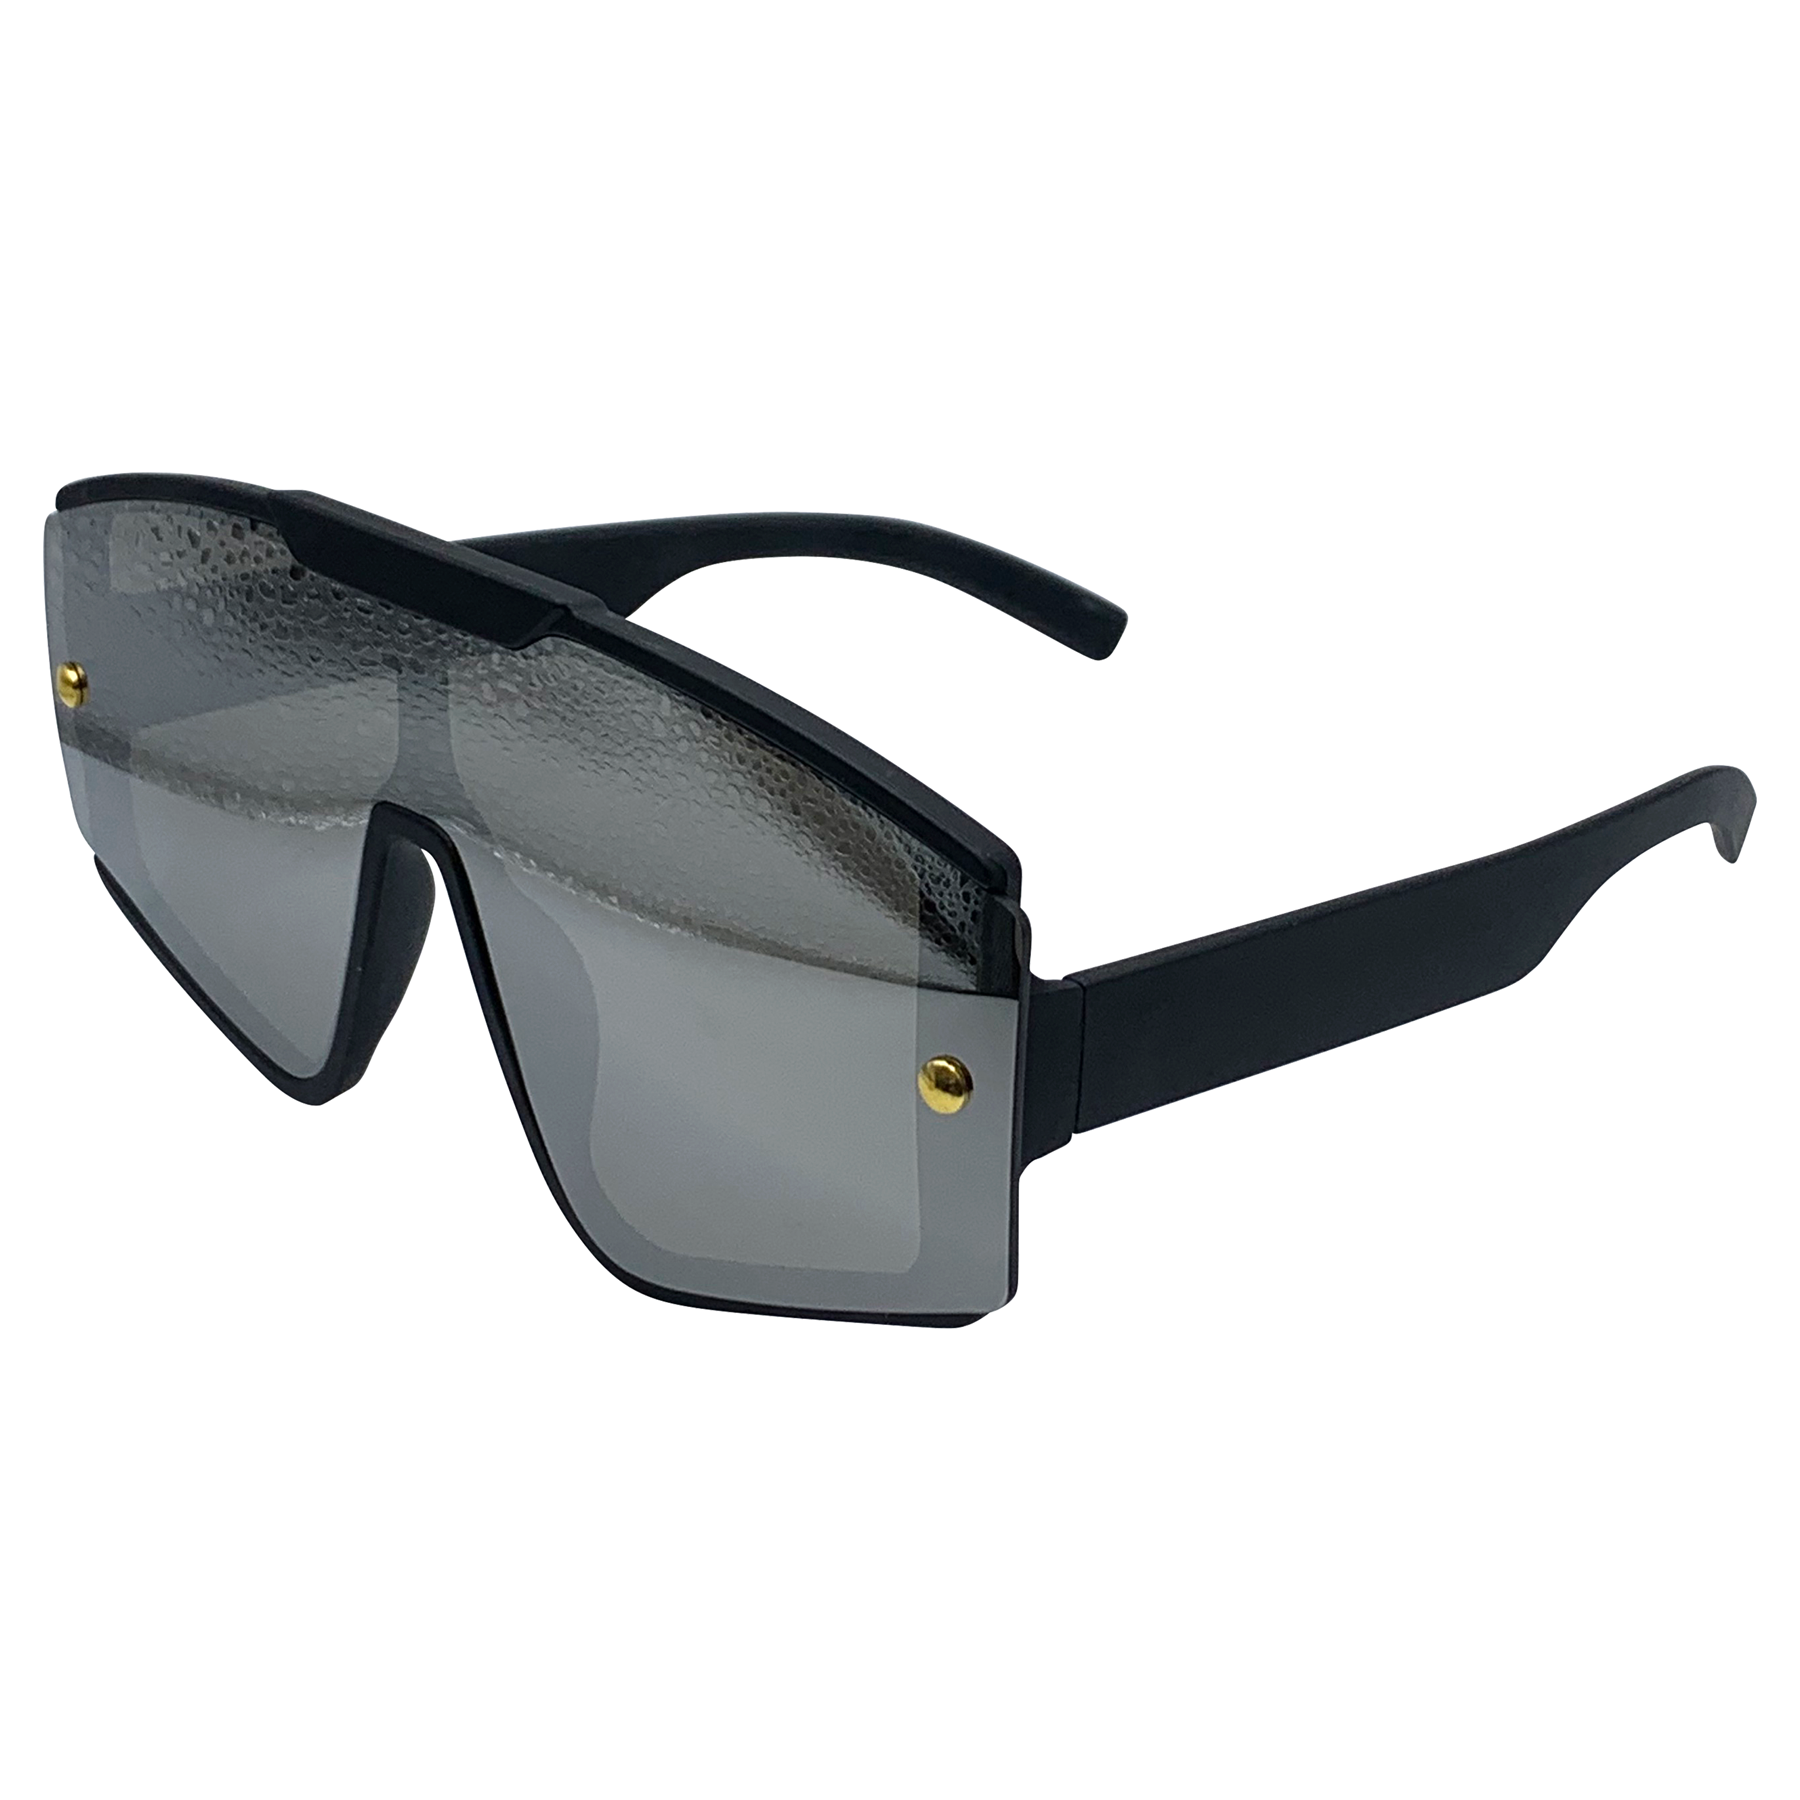 SNOWFLAKE Sleek Retro-Style Ski Shield Sunglasses